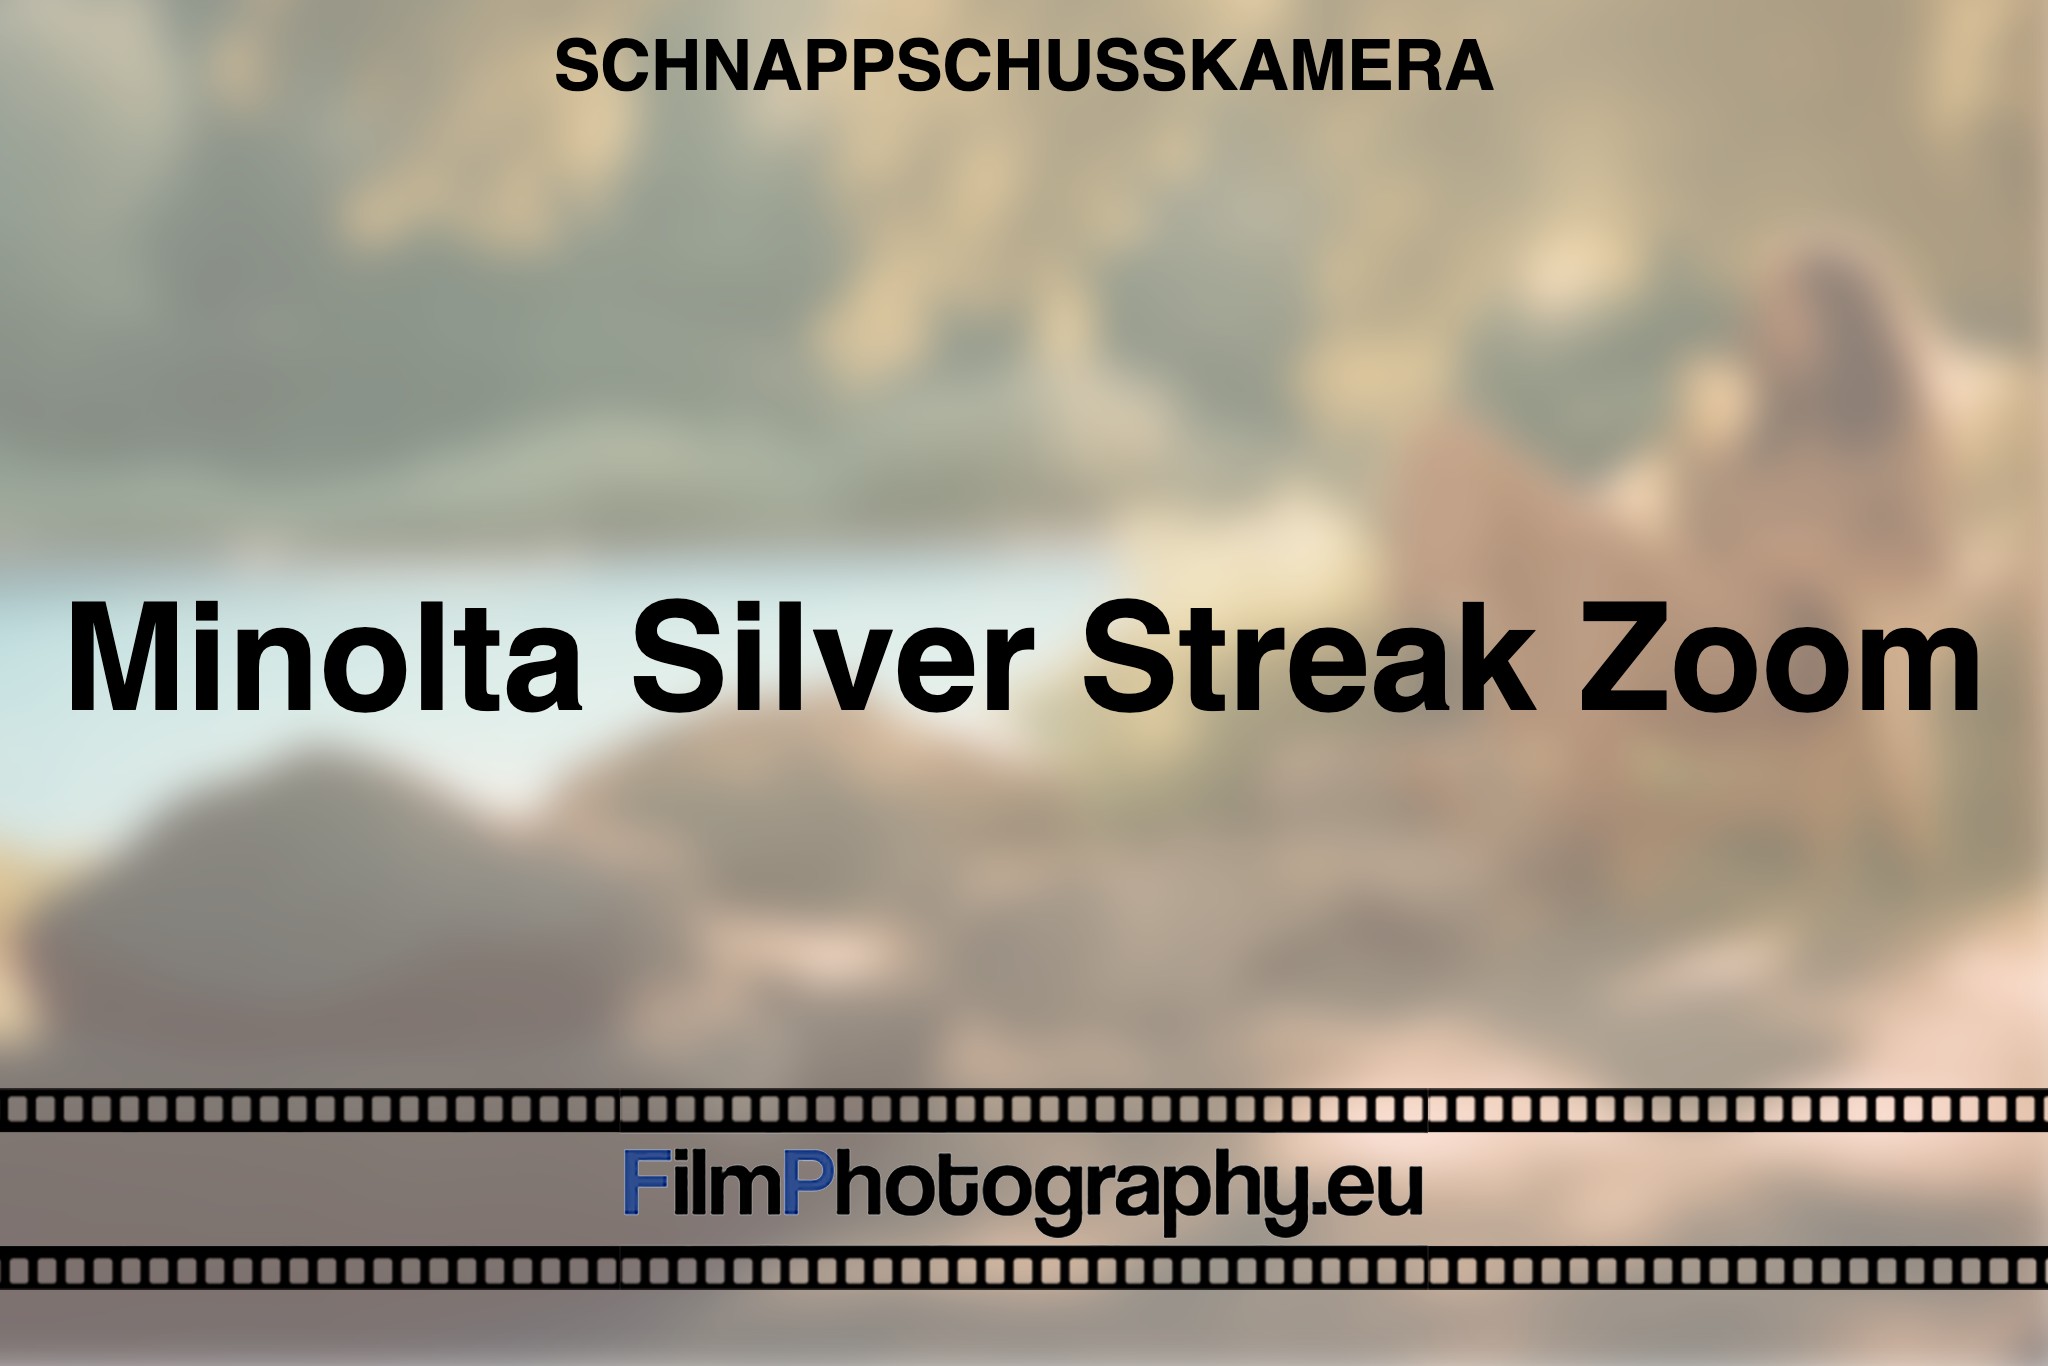 minolta-silver-streak-zoom-schnappschusskamera-bnv